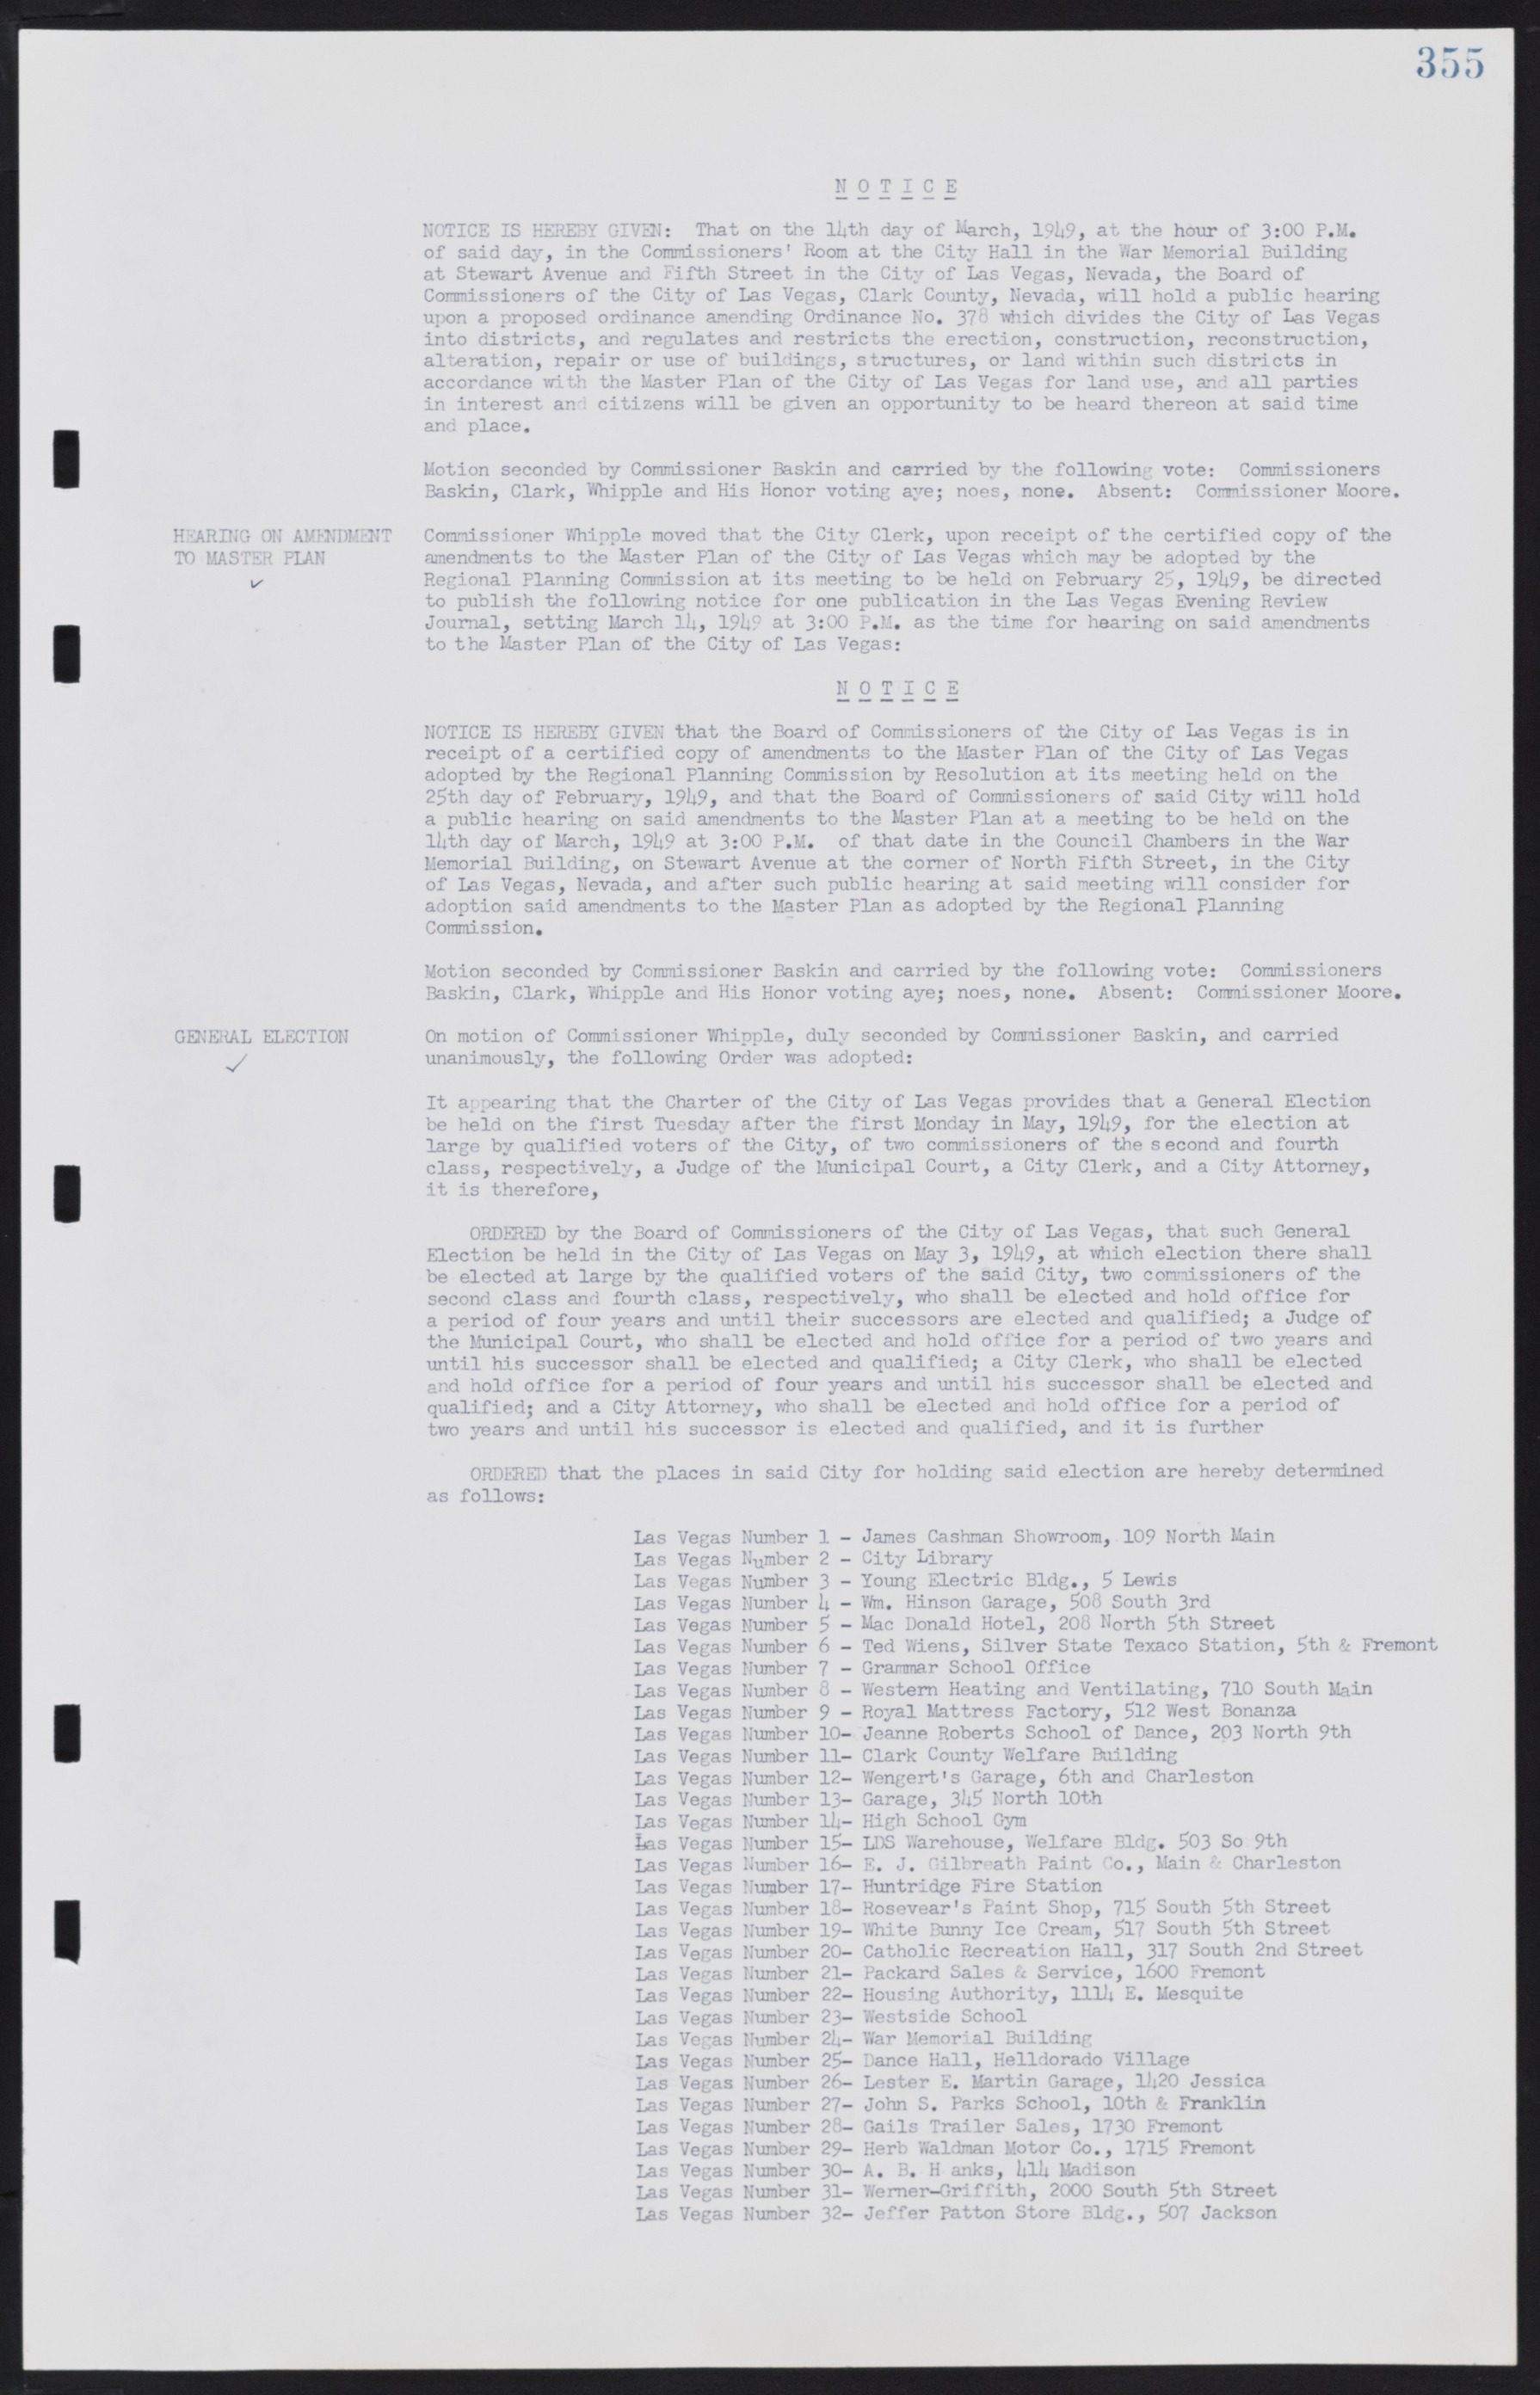 Las Vegas City Commission Minutes, January 7, 1947 to October 26, 1949, lvc000006-383